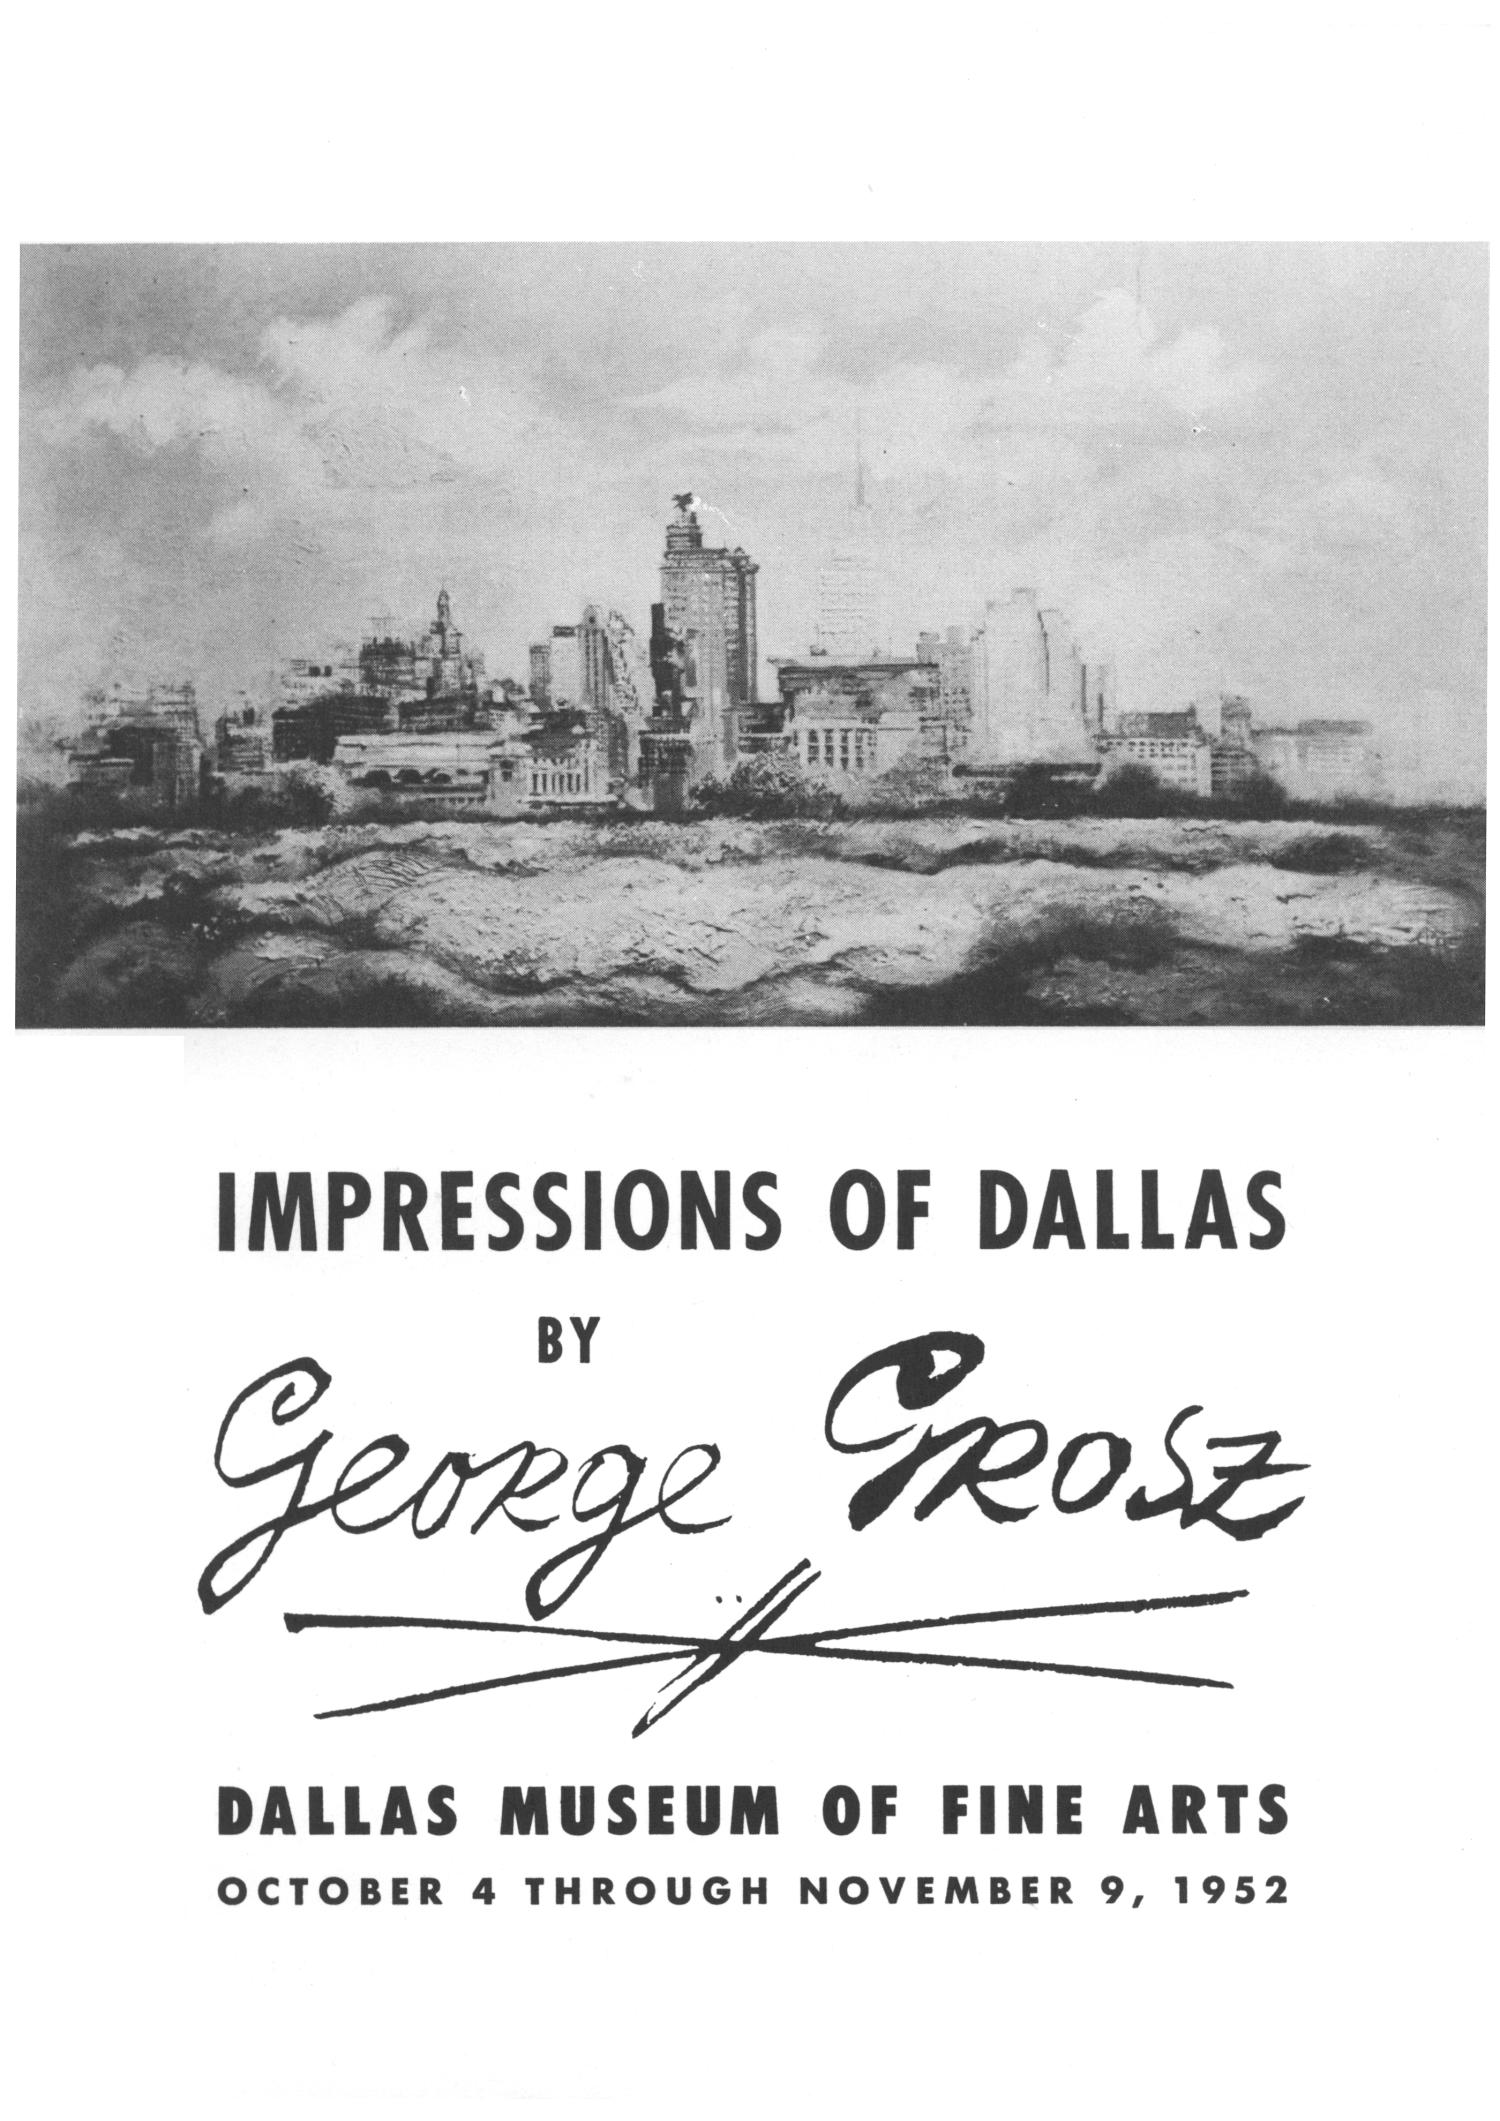 Impressions of Dallas by George Grosz
                                                
                                                    1
                                                